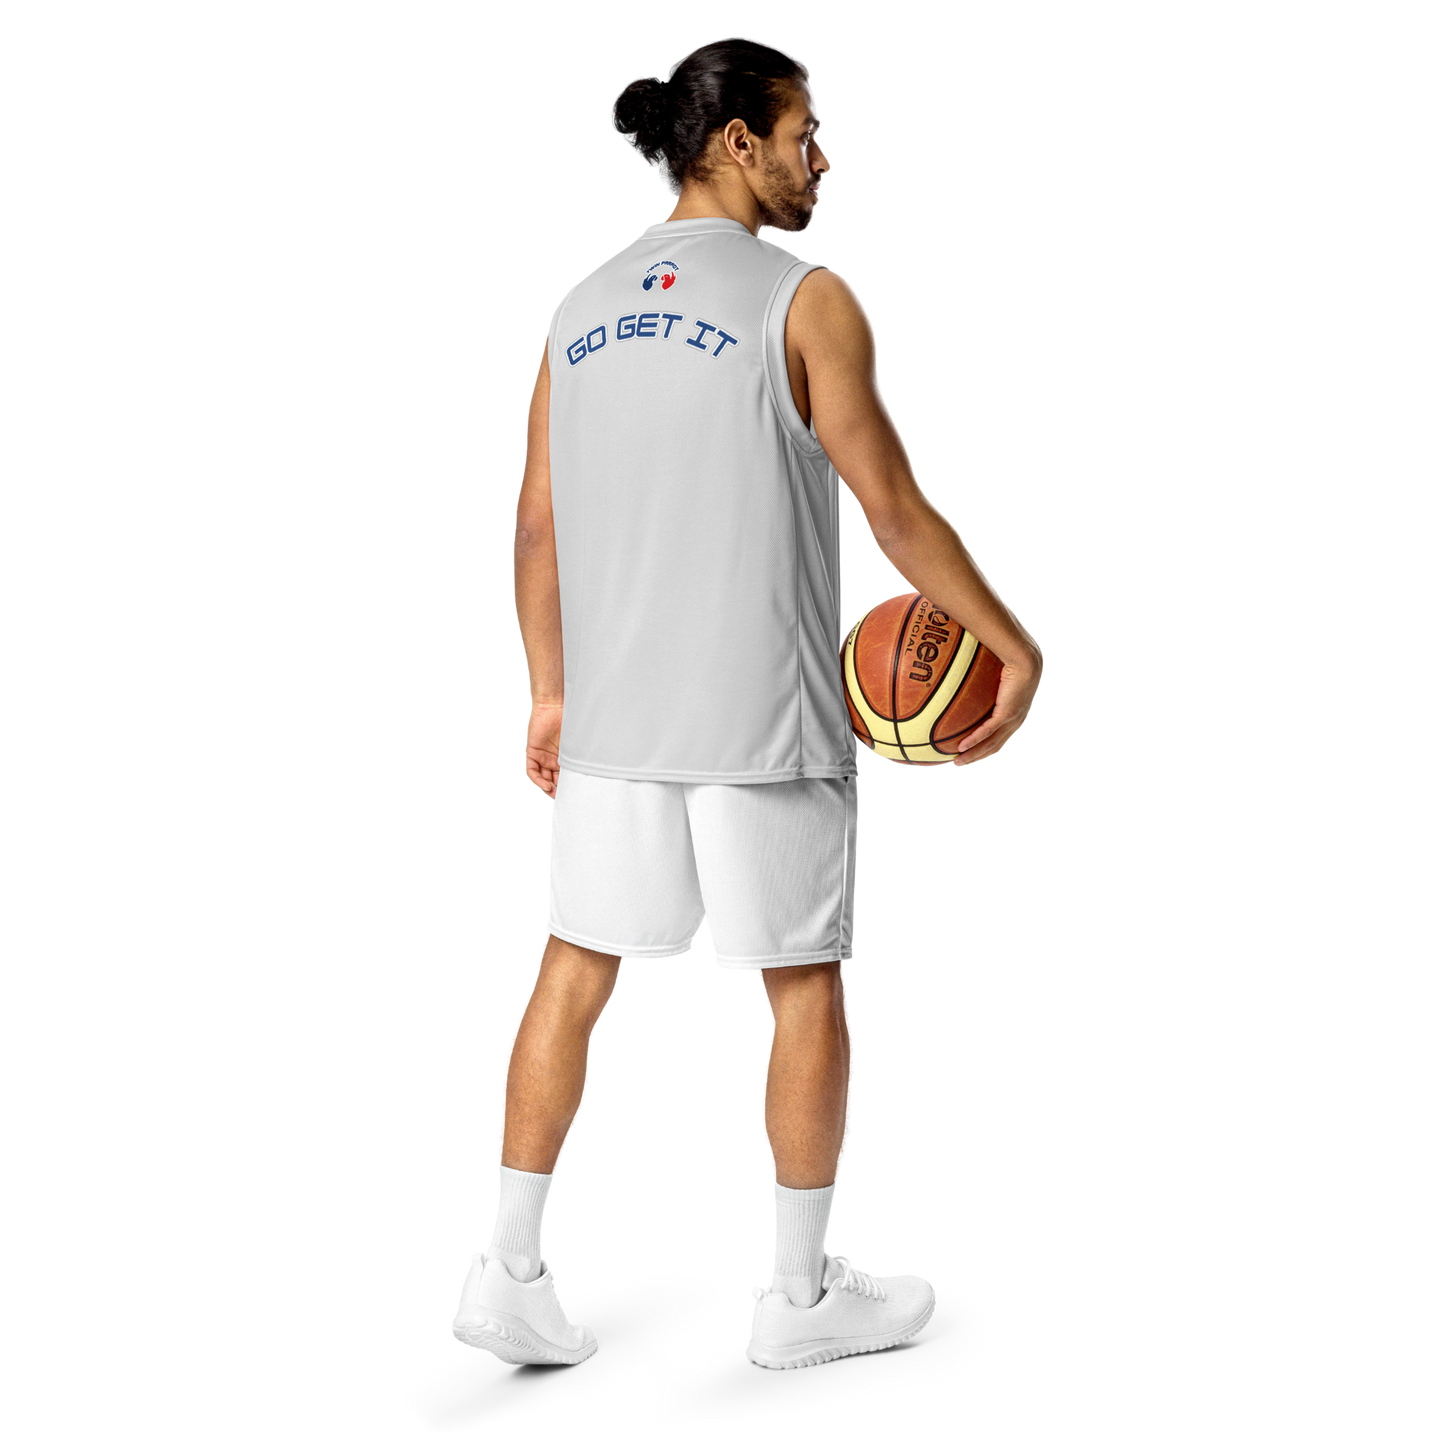 Camiseta de baloncesto unisex (sin número)